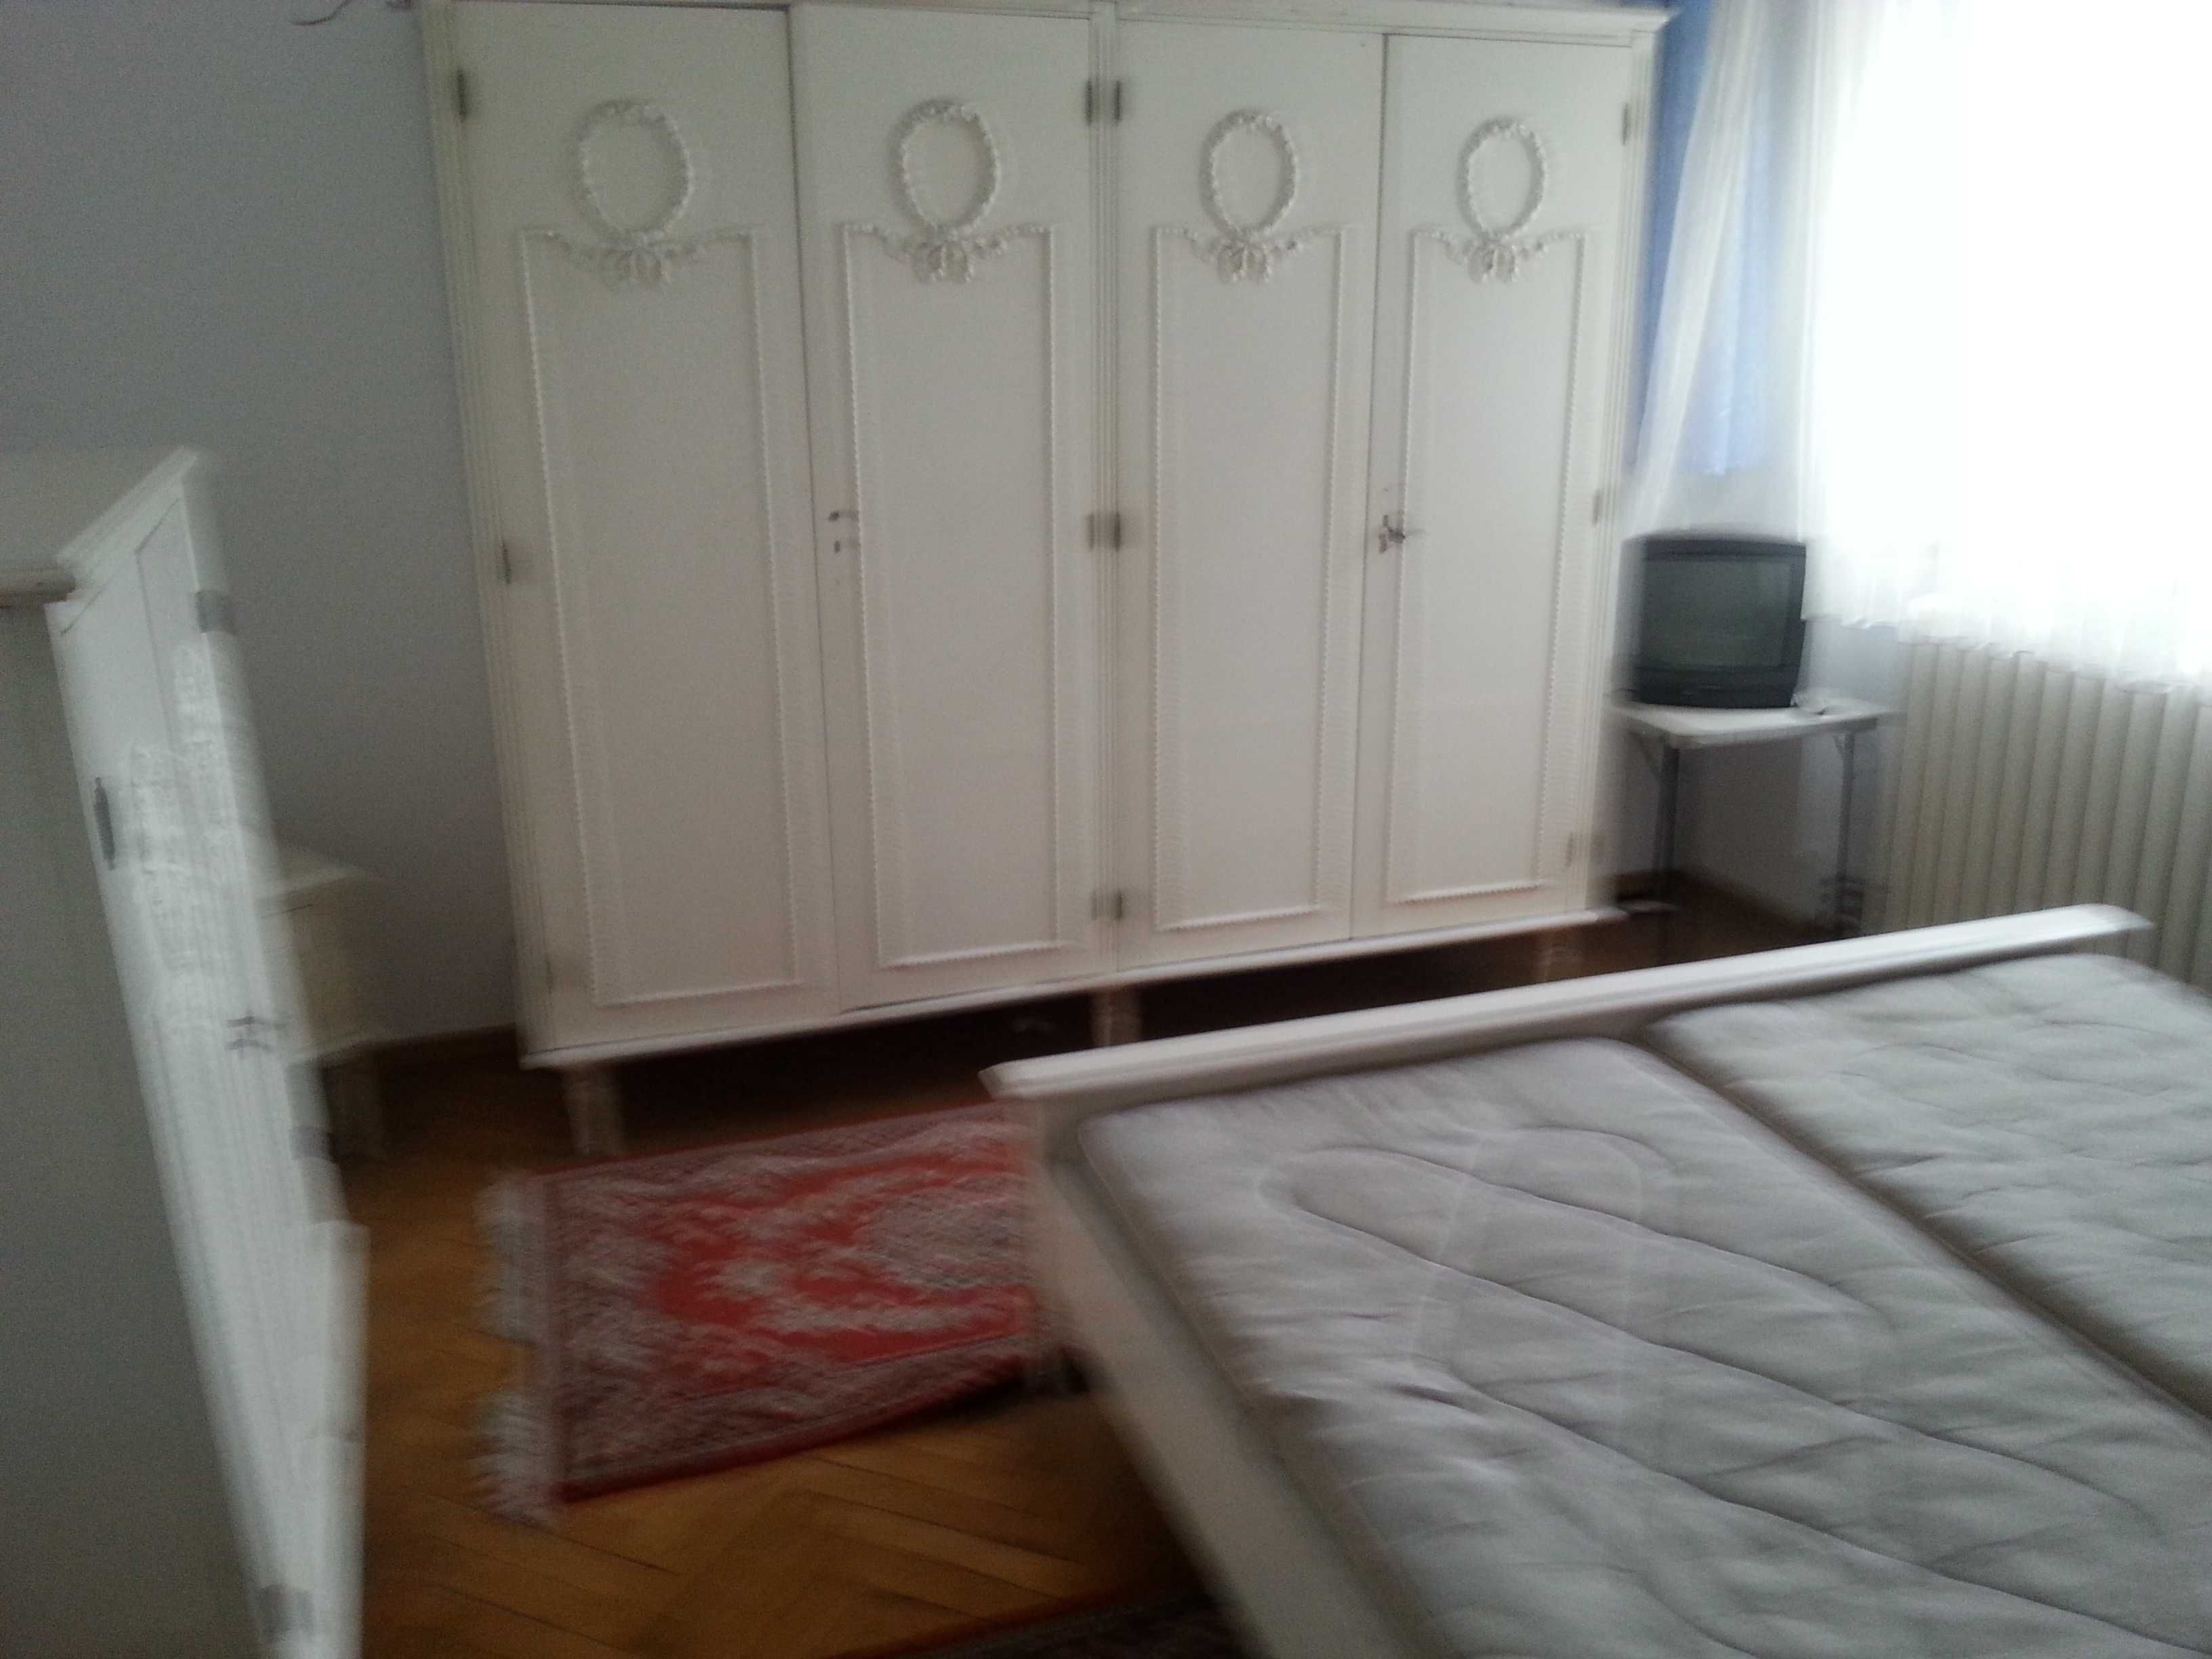 Închiriez apartament 3 camere,Satu Mare,Bulevardul Traian,etaj IV.